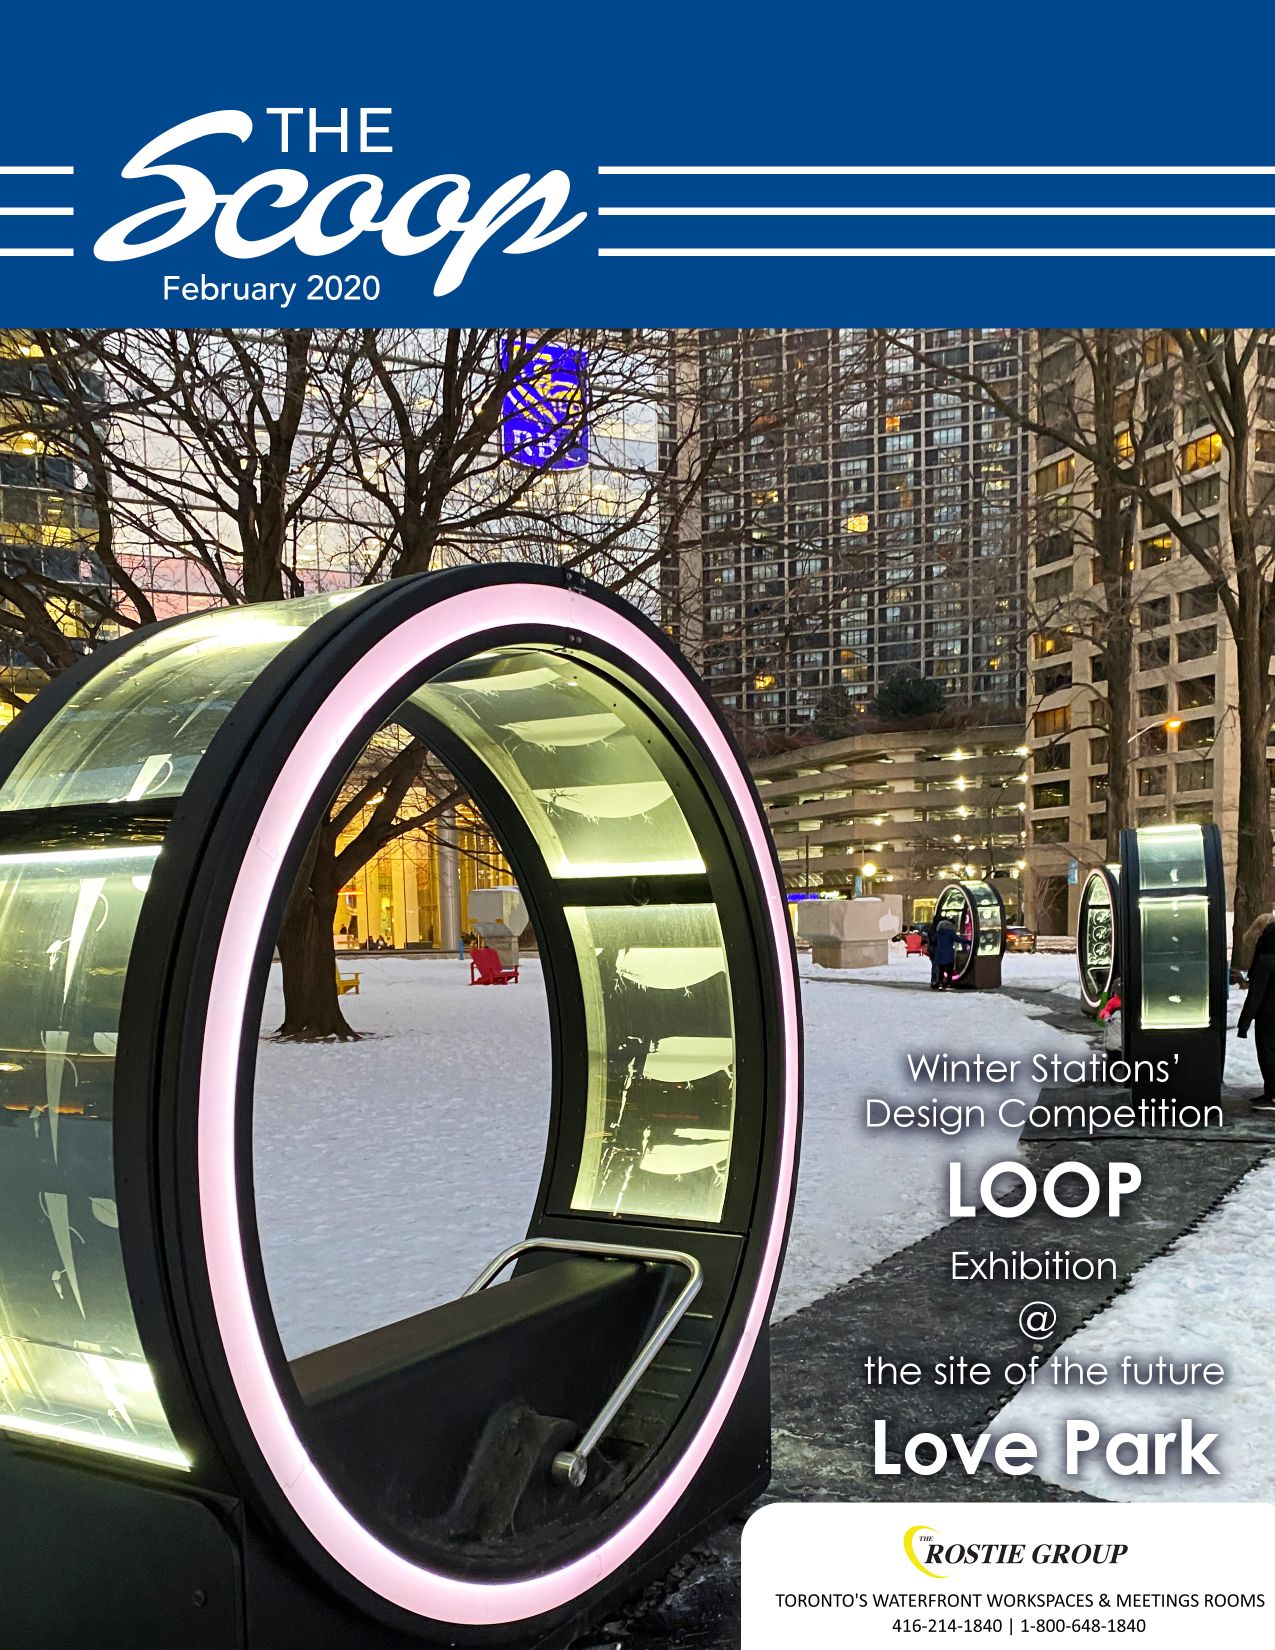 Rostie Group Scoop February 2020 Scoop Cover